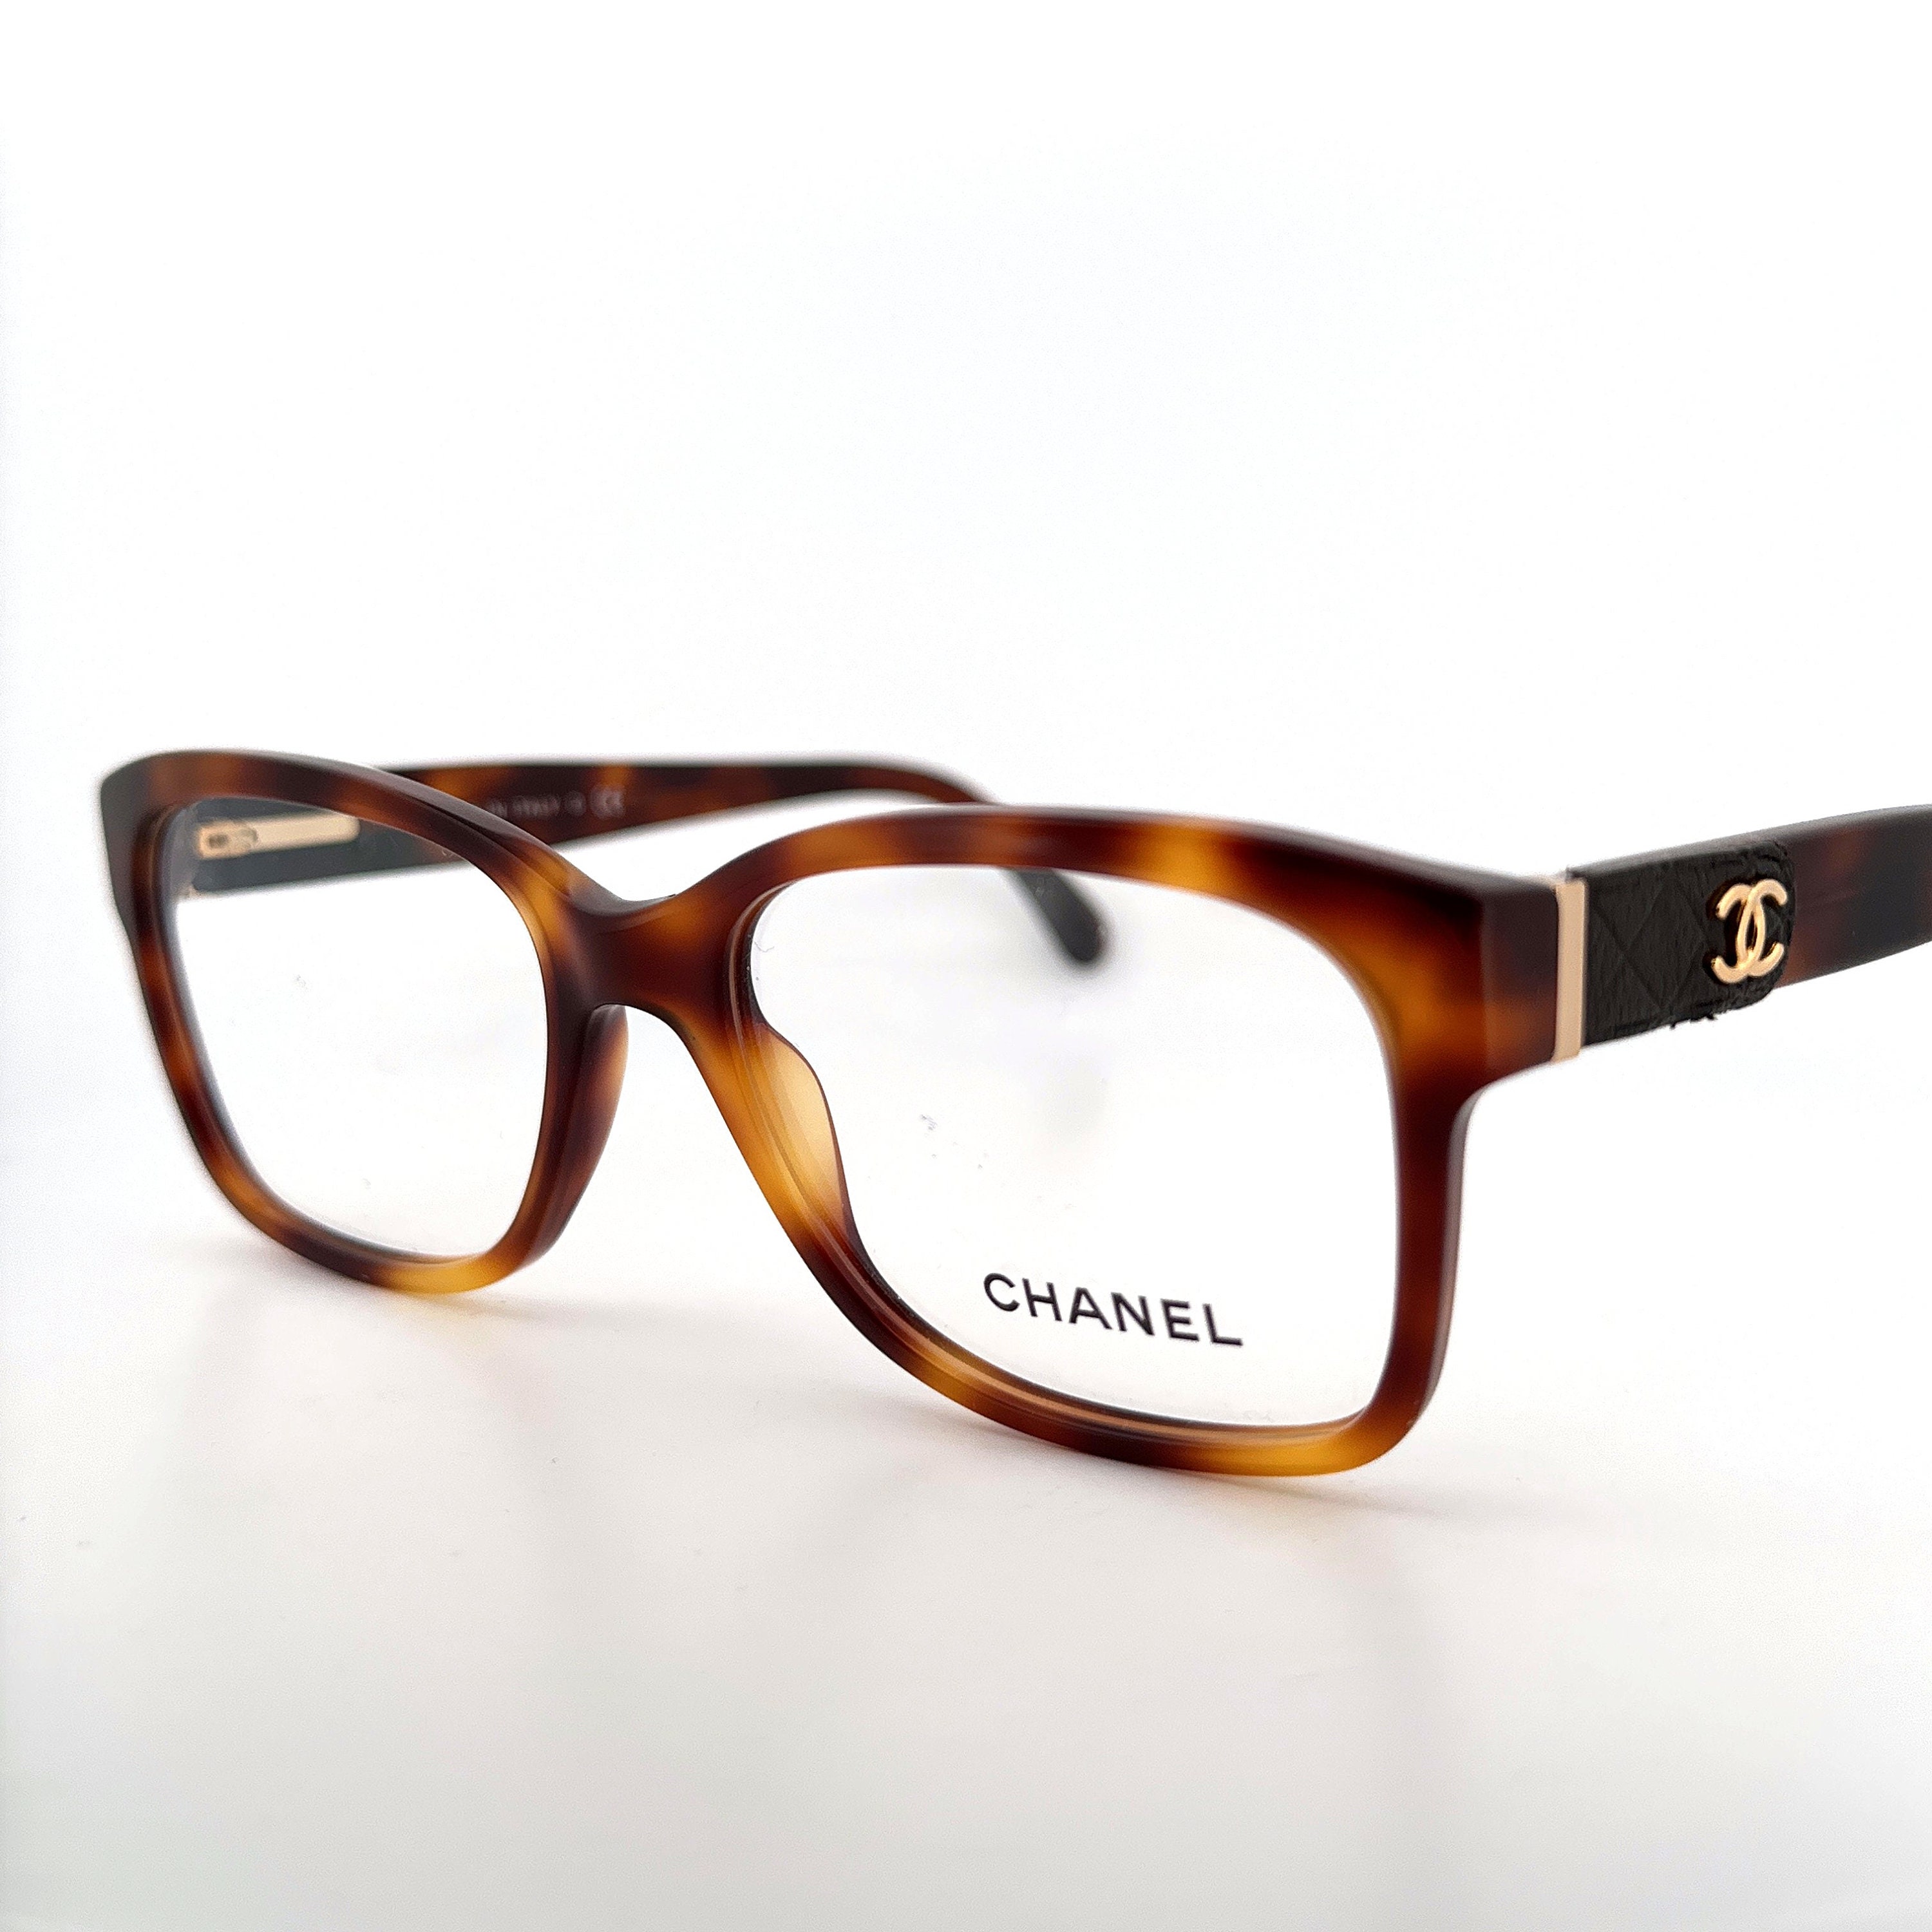 Chanel Eyeglasses -  UK